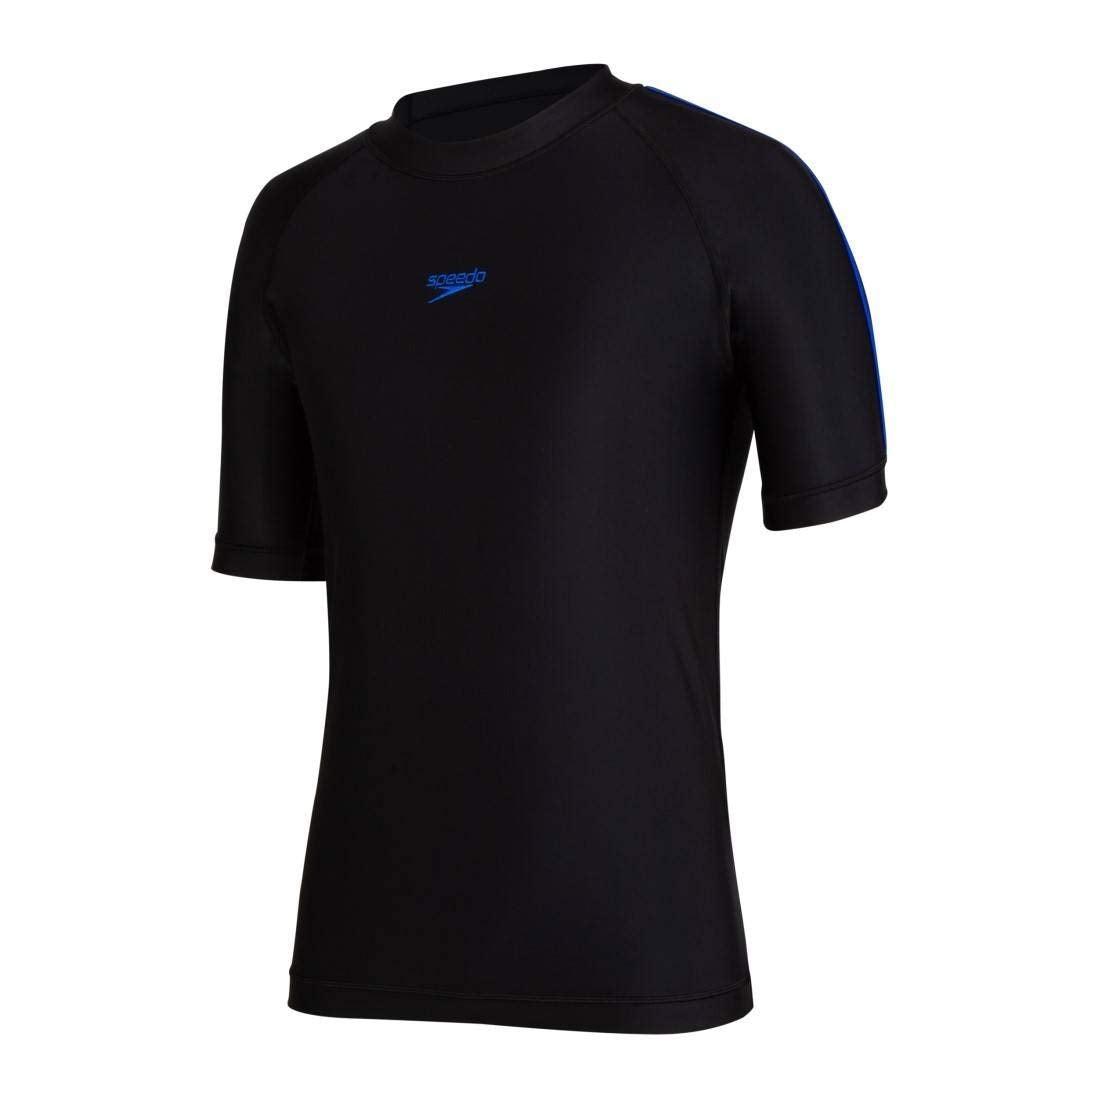 Speedo Swimwear Men T-Shirt - Best Price online Prokicksports.com